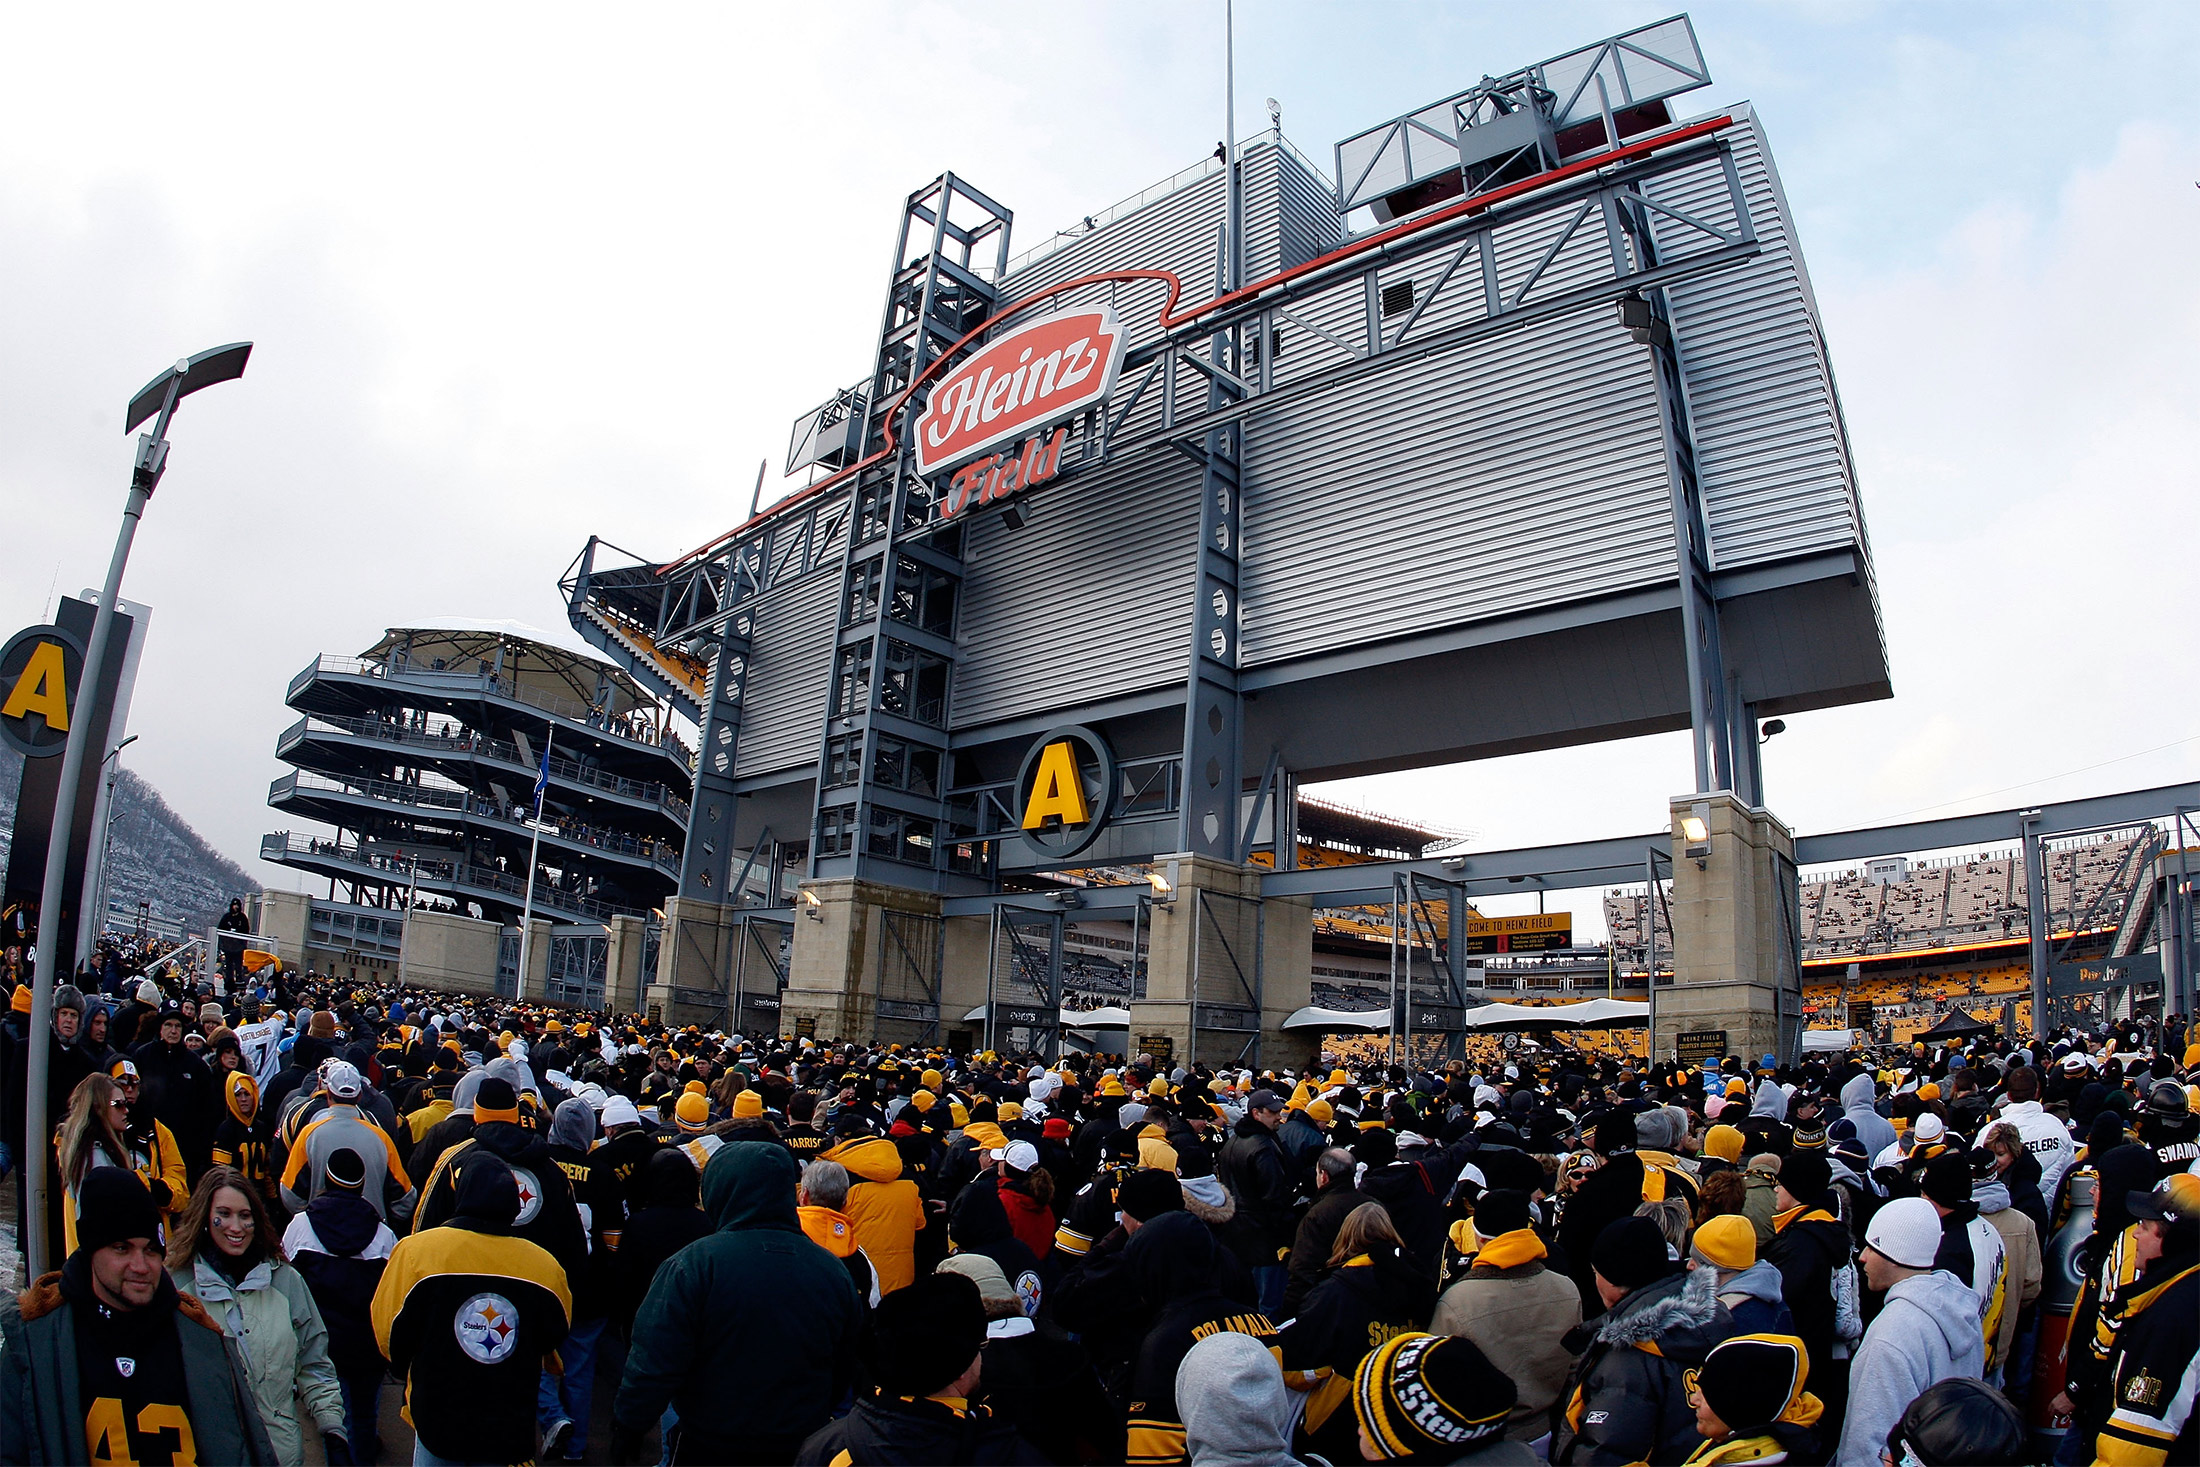 Pittsburgh Steelers win home opener at Heinz Field